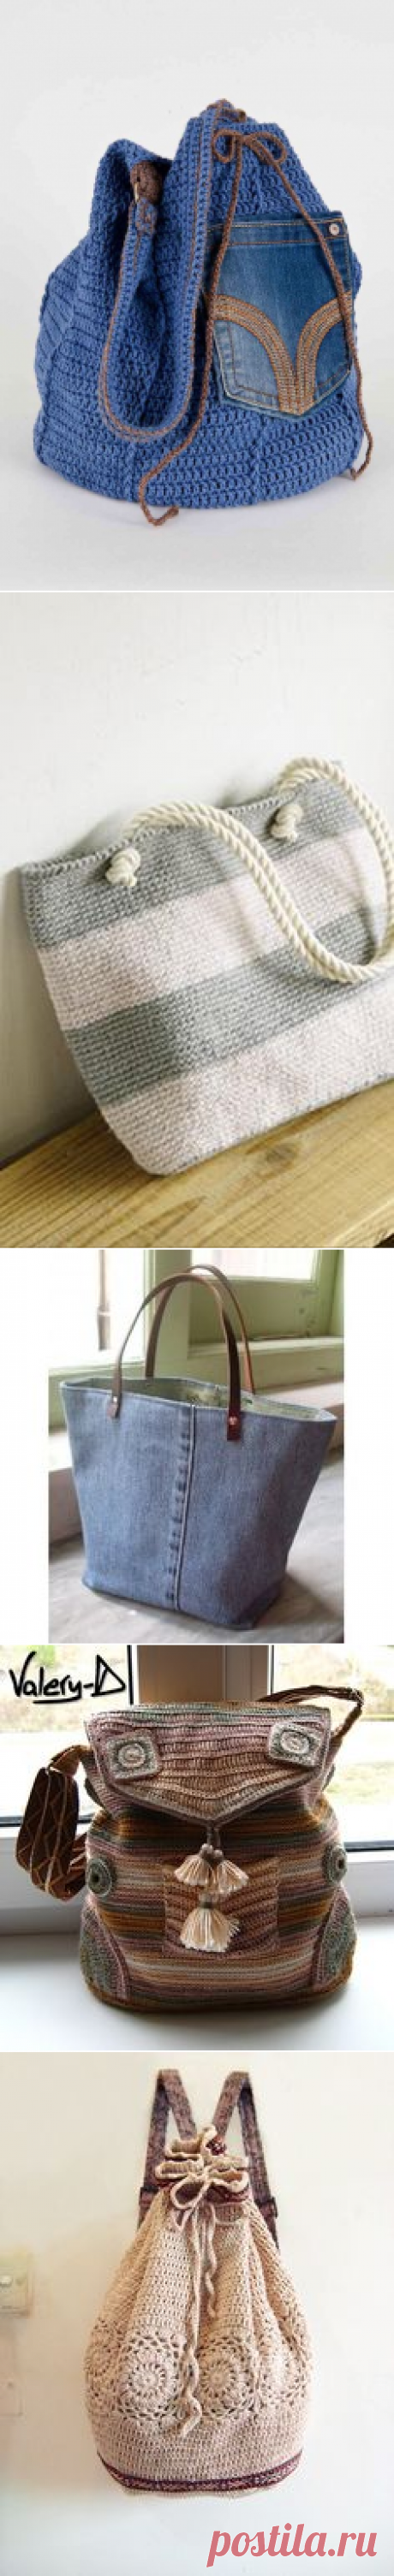 Crochet bag | crochet bags and baskets